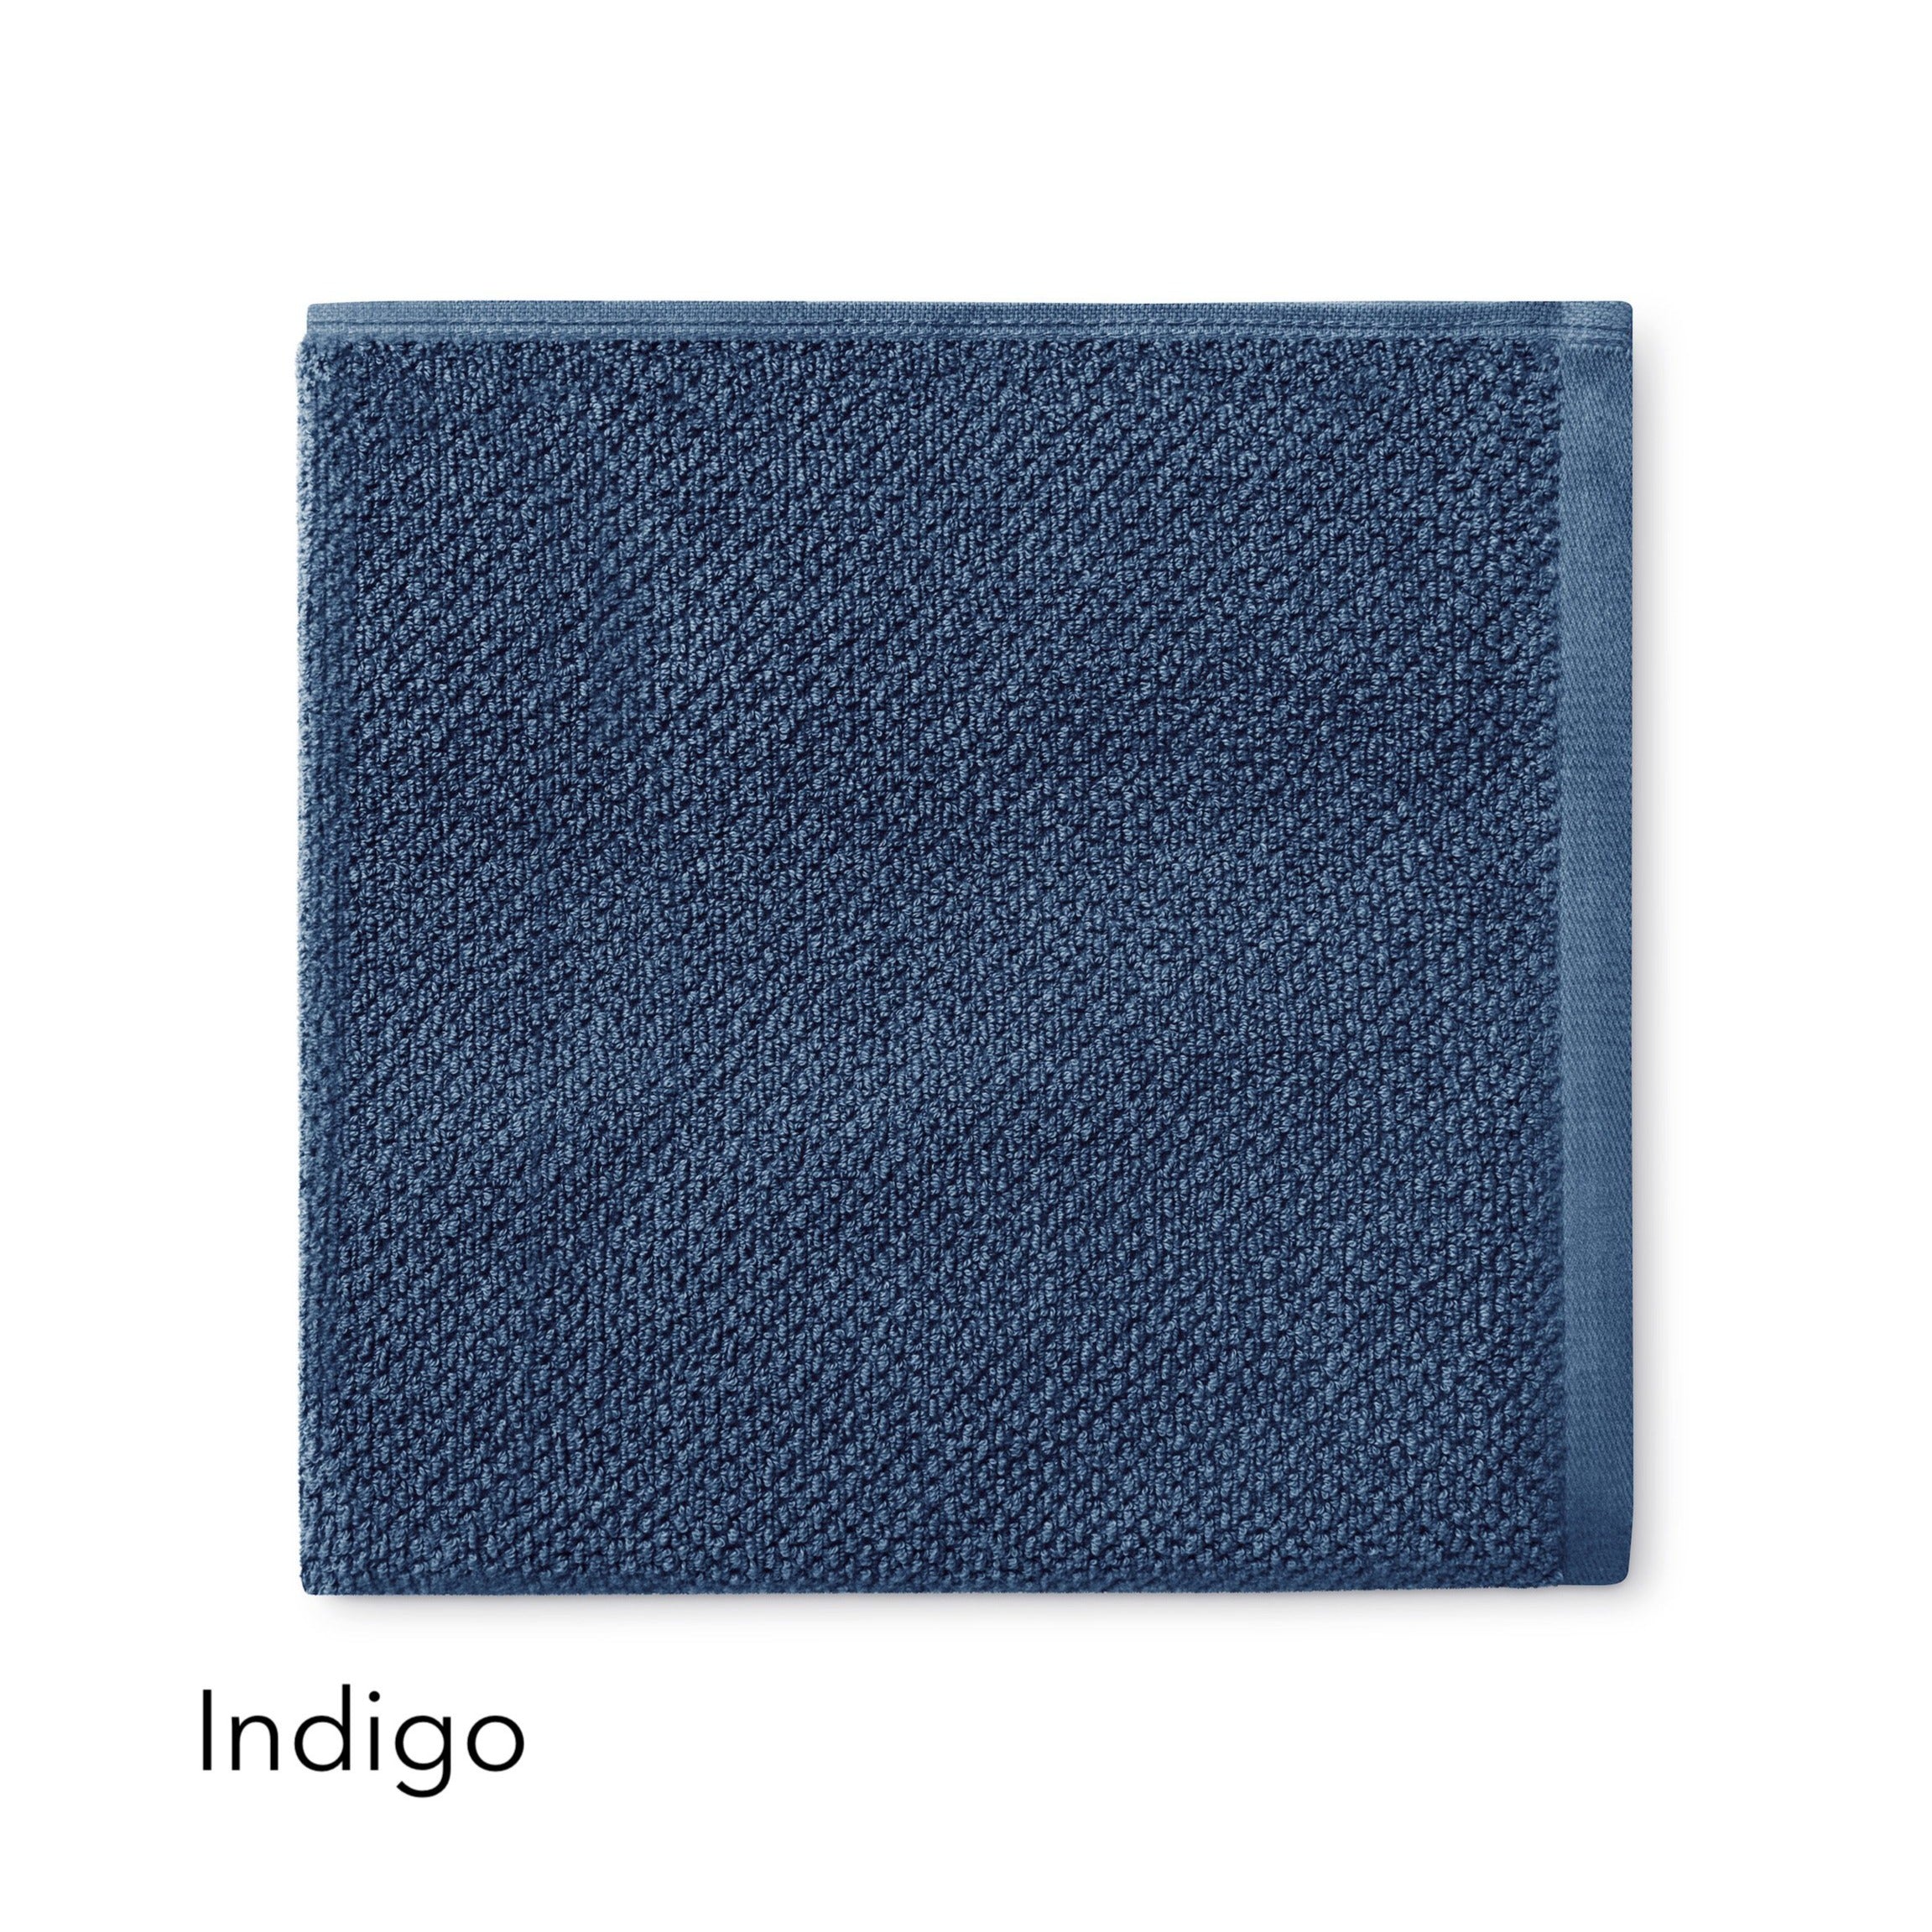 Buy indigo Nova Organic Cotton Towels